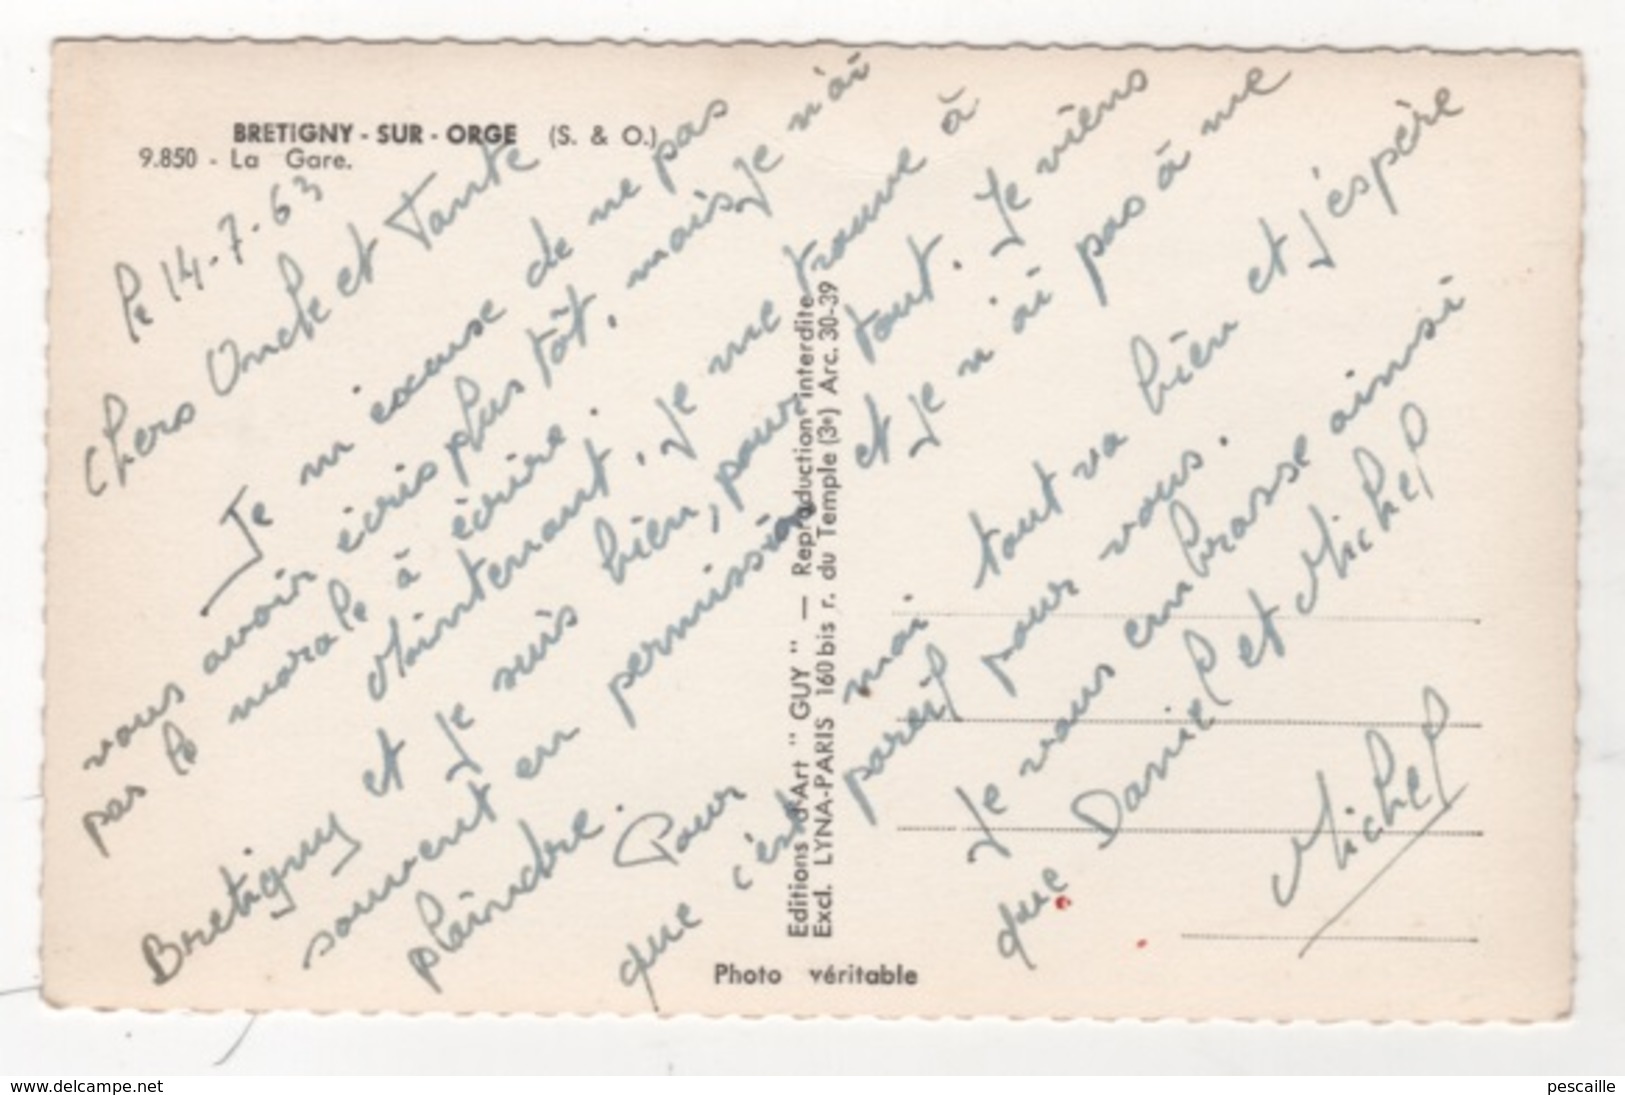 91 ESSONNE - CP BRETIGNY SUR ORGE - LA GARE - EDITIONS D'ART GUY N° 9.850 - ECRITE EN 1963 - Bretigny Sur Orge